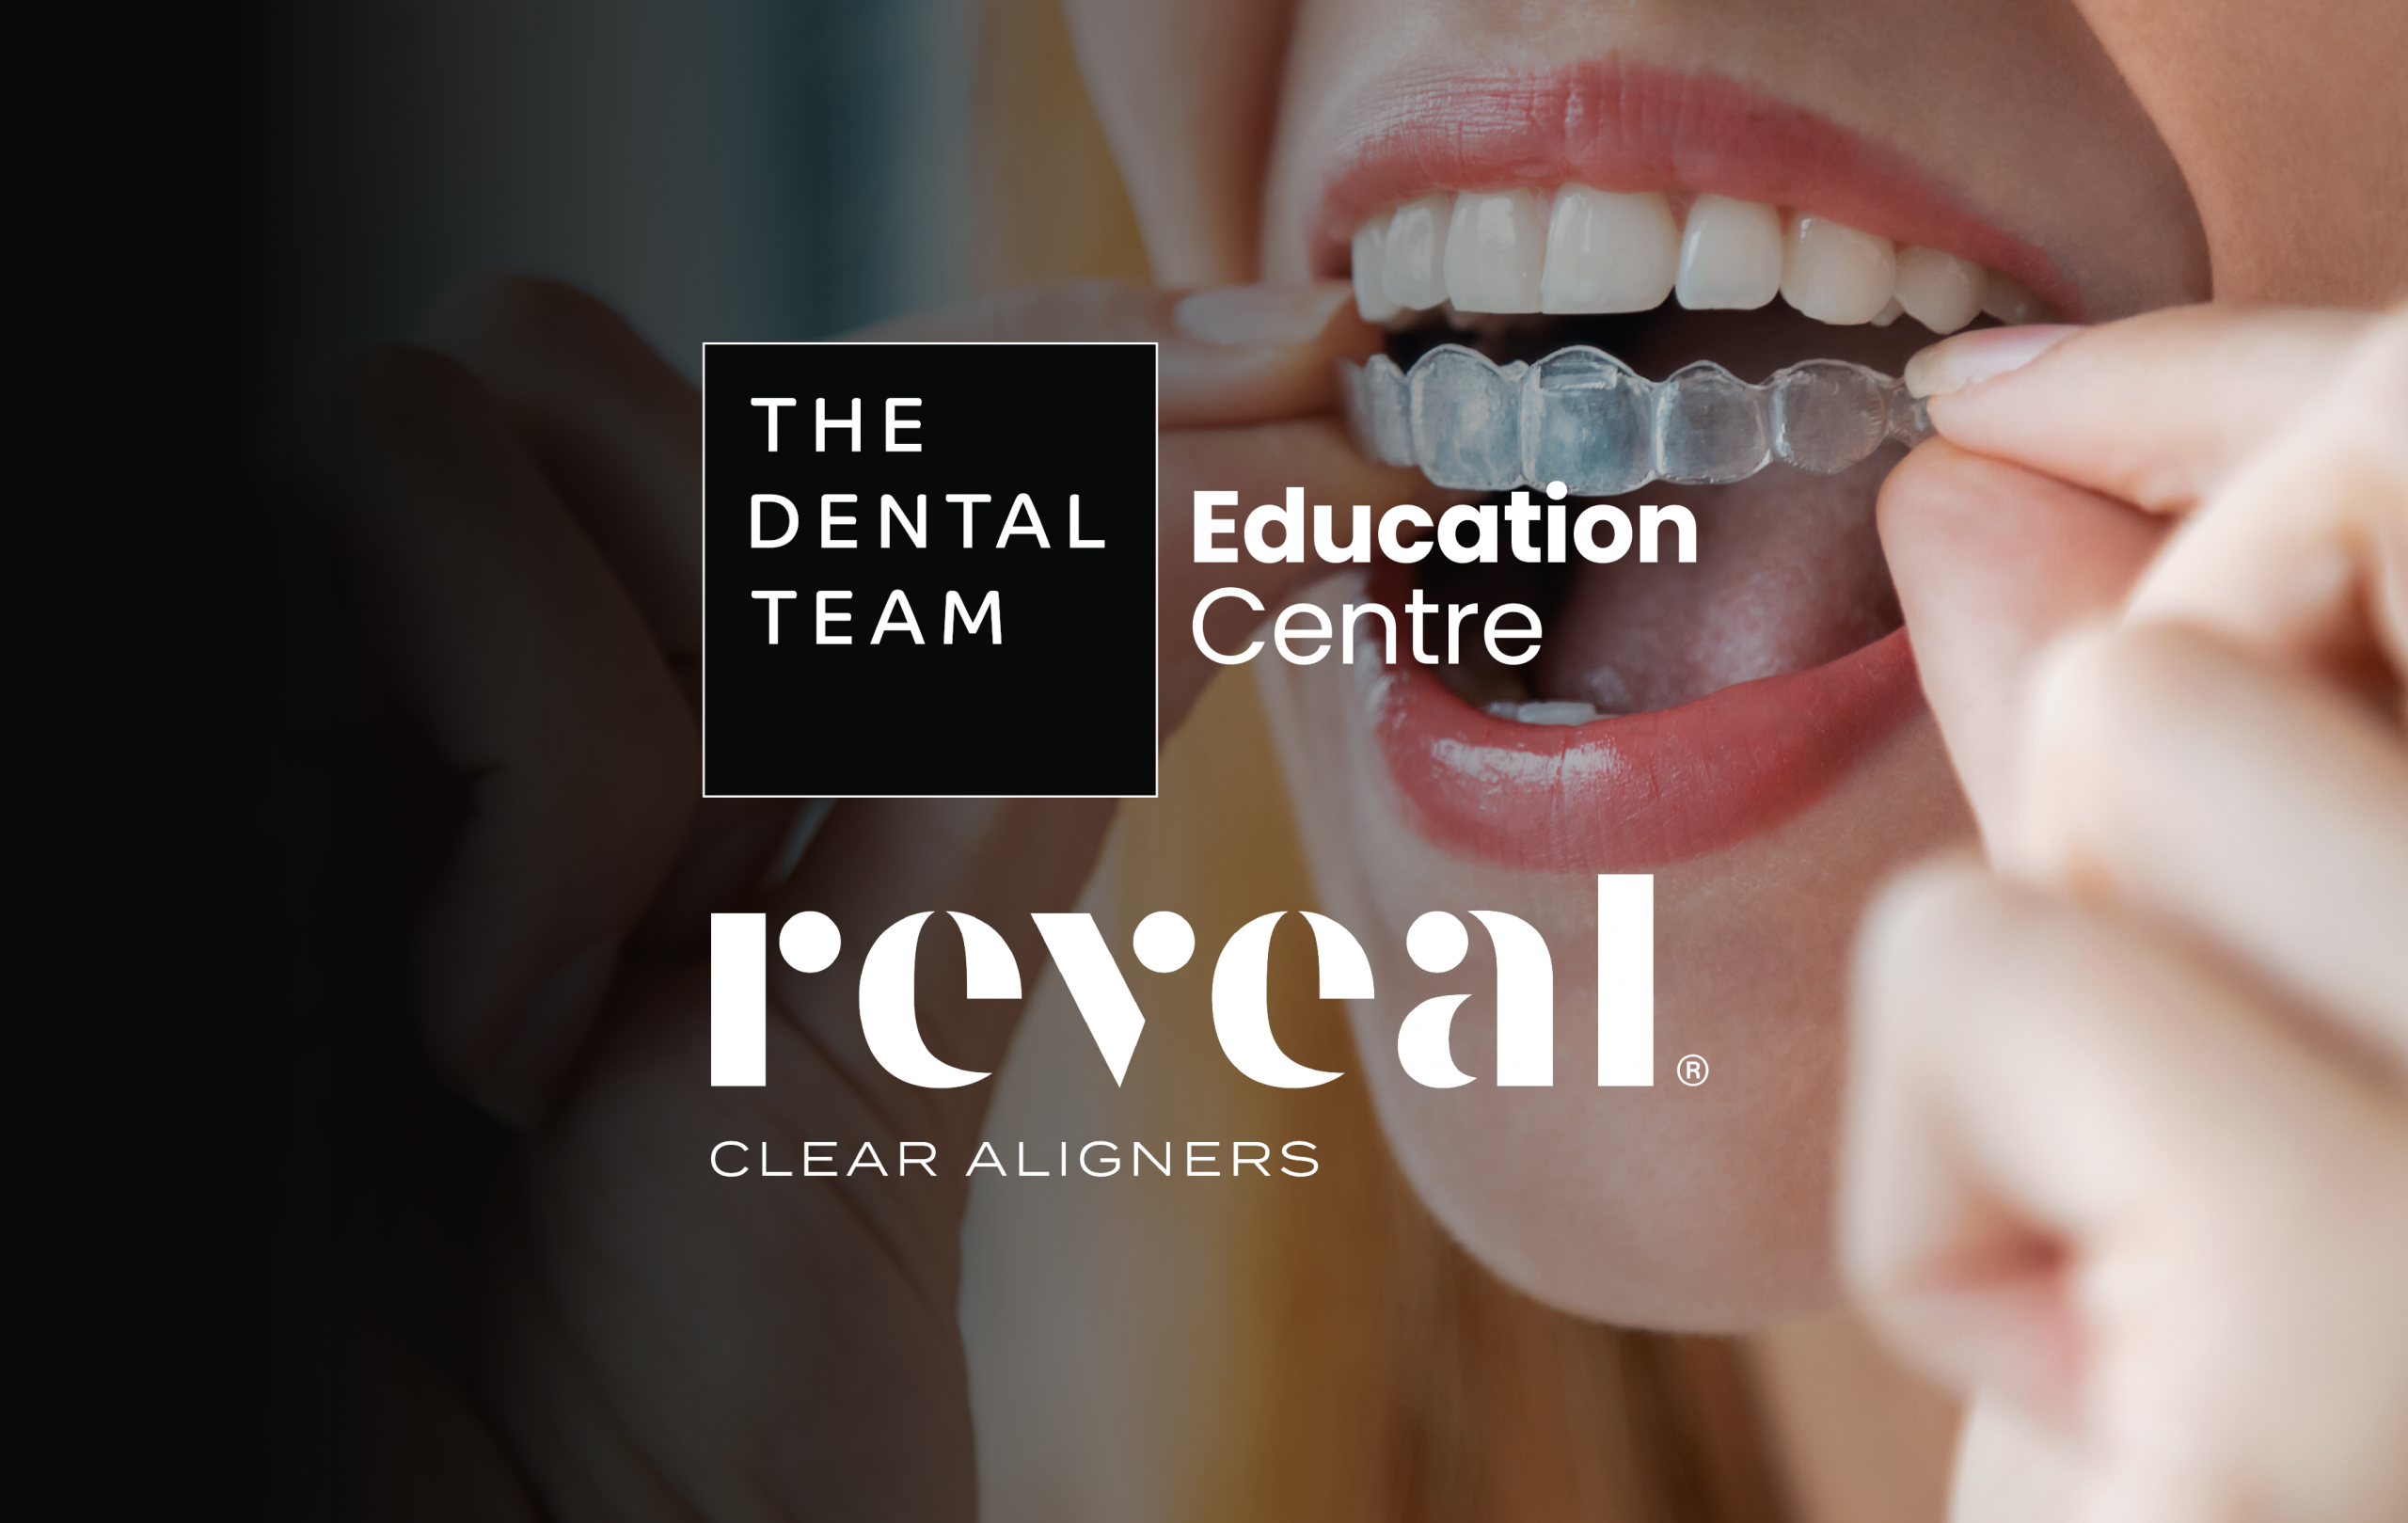 The Dental Team Education Centre Invislaign Reveal Aligner Course Manchester North West UK